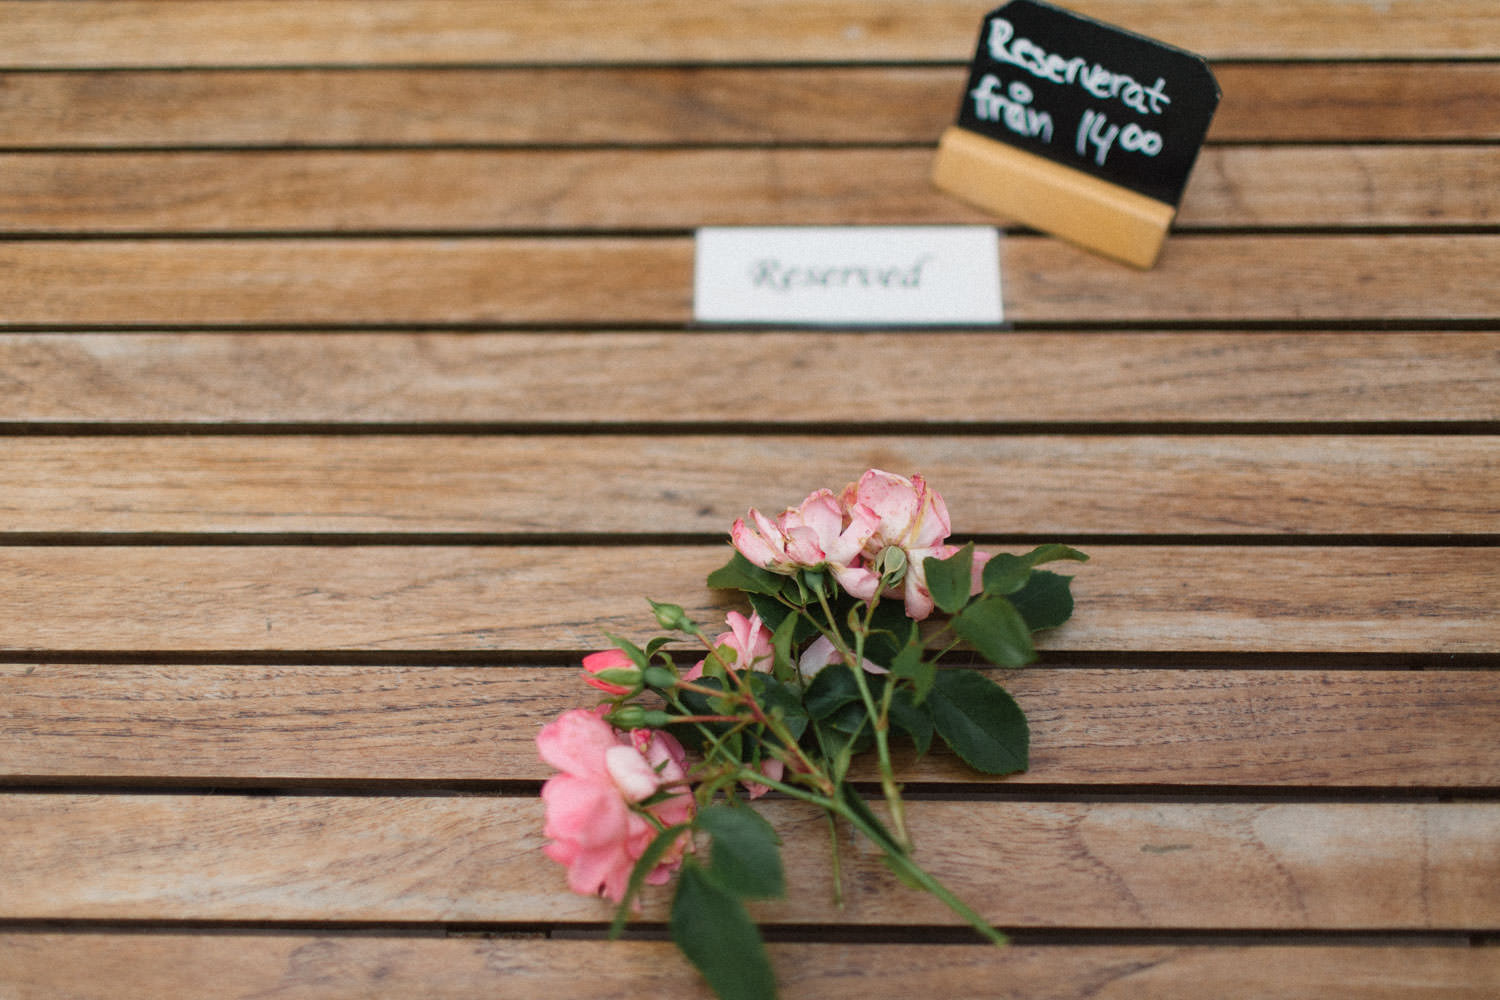 Blommor på ett bord, skylt med reserverat.